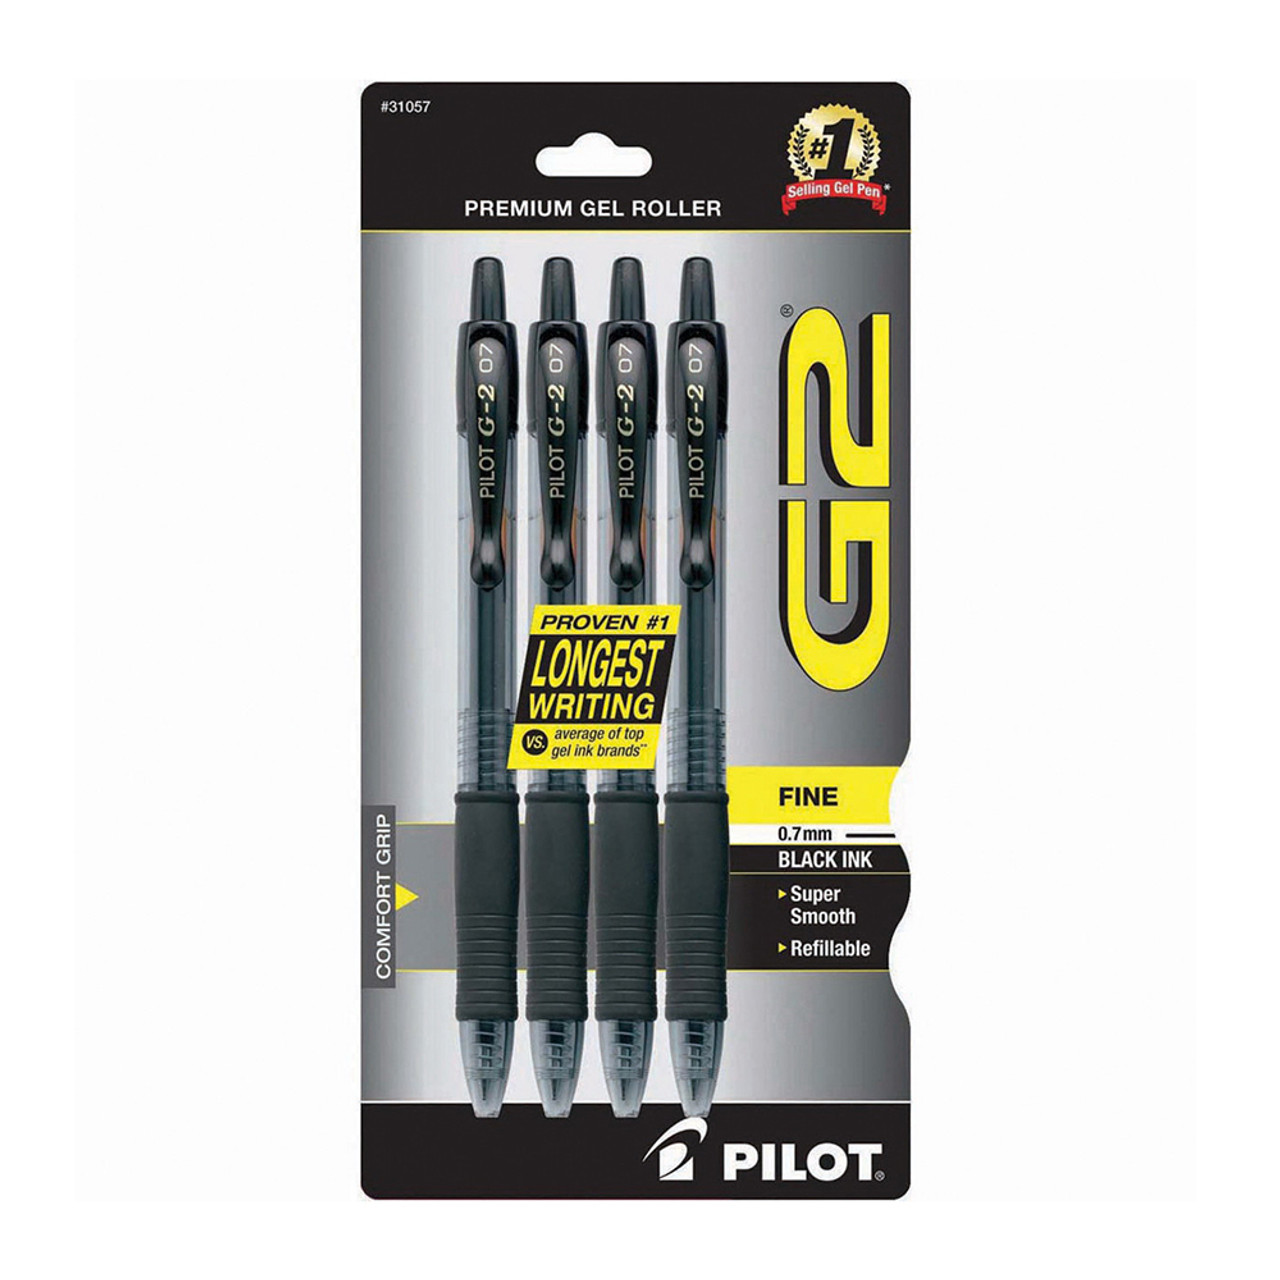  Pilot, G2 Premium Gel Roller Pens, Extra Fine Point